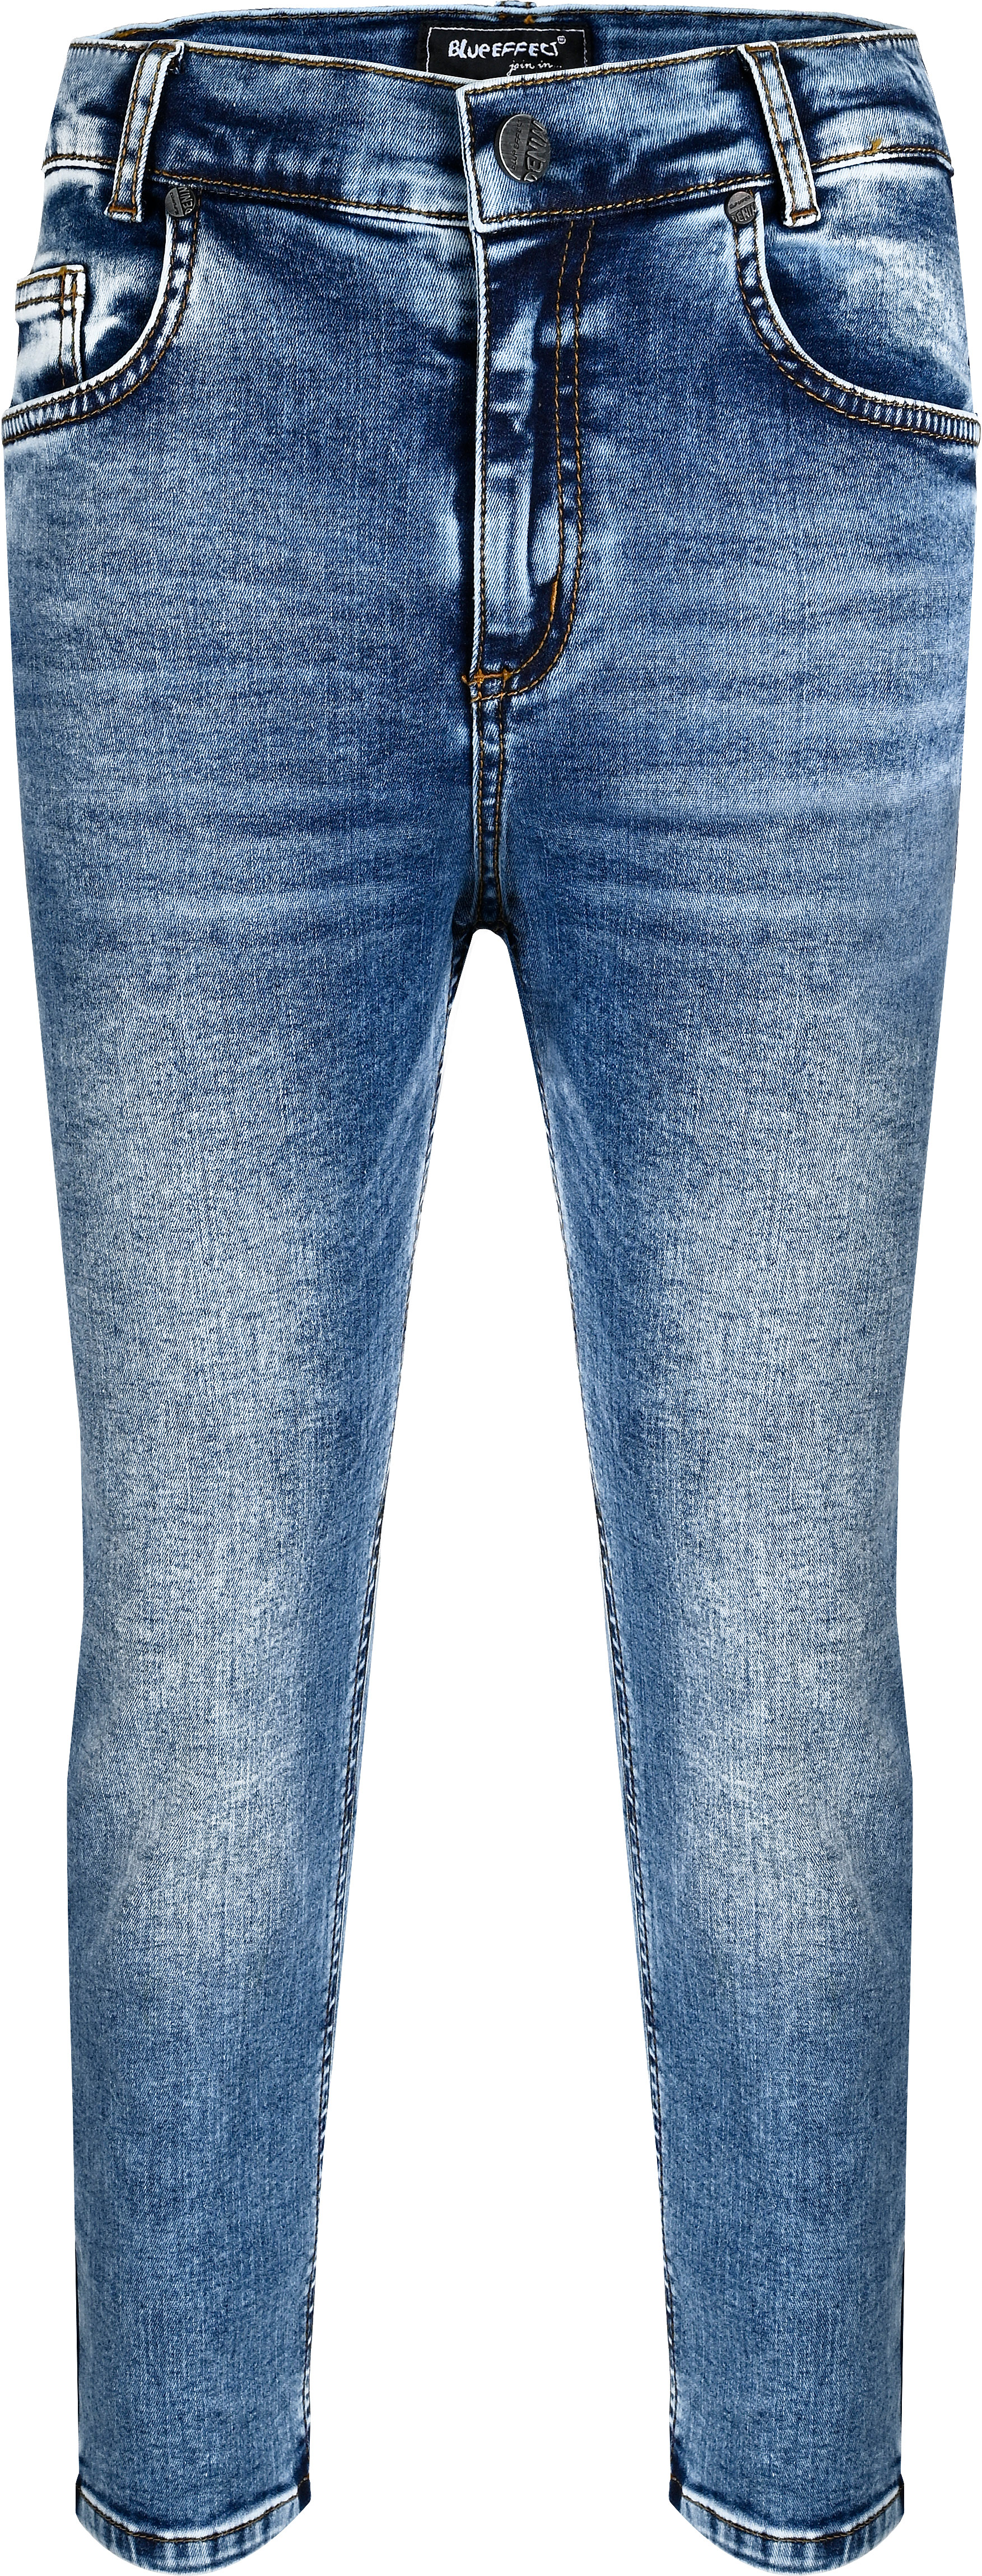 2813-NOS Boys Loose Fit Jeans verfügbar in Normal